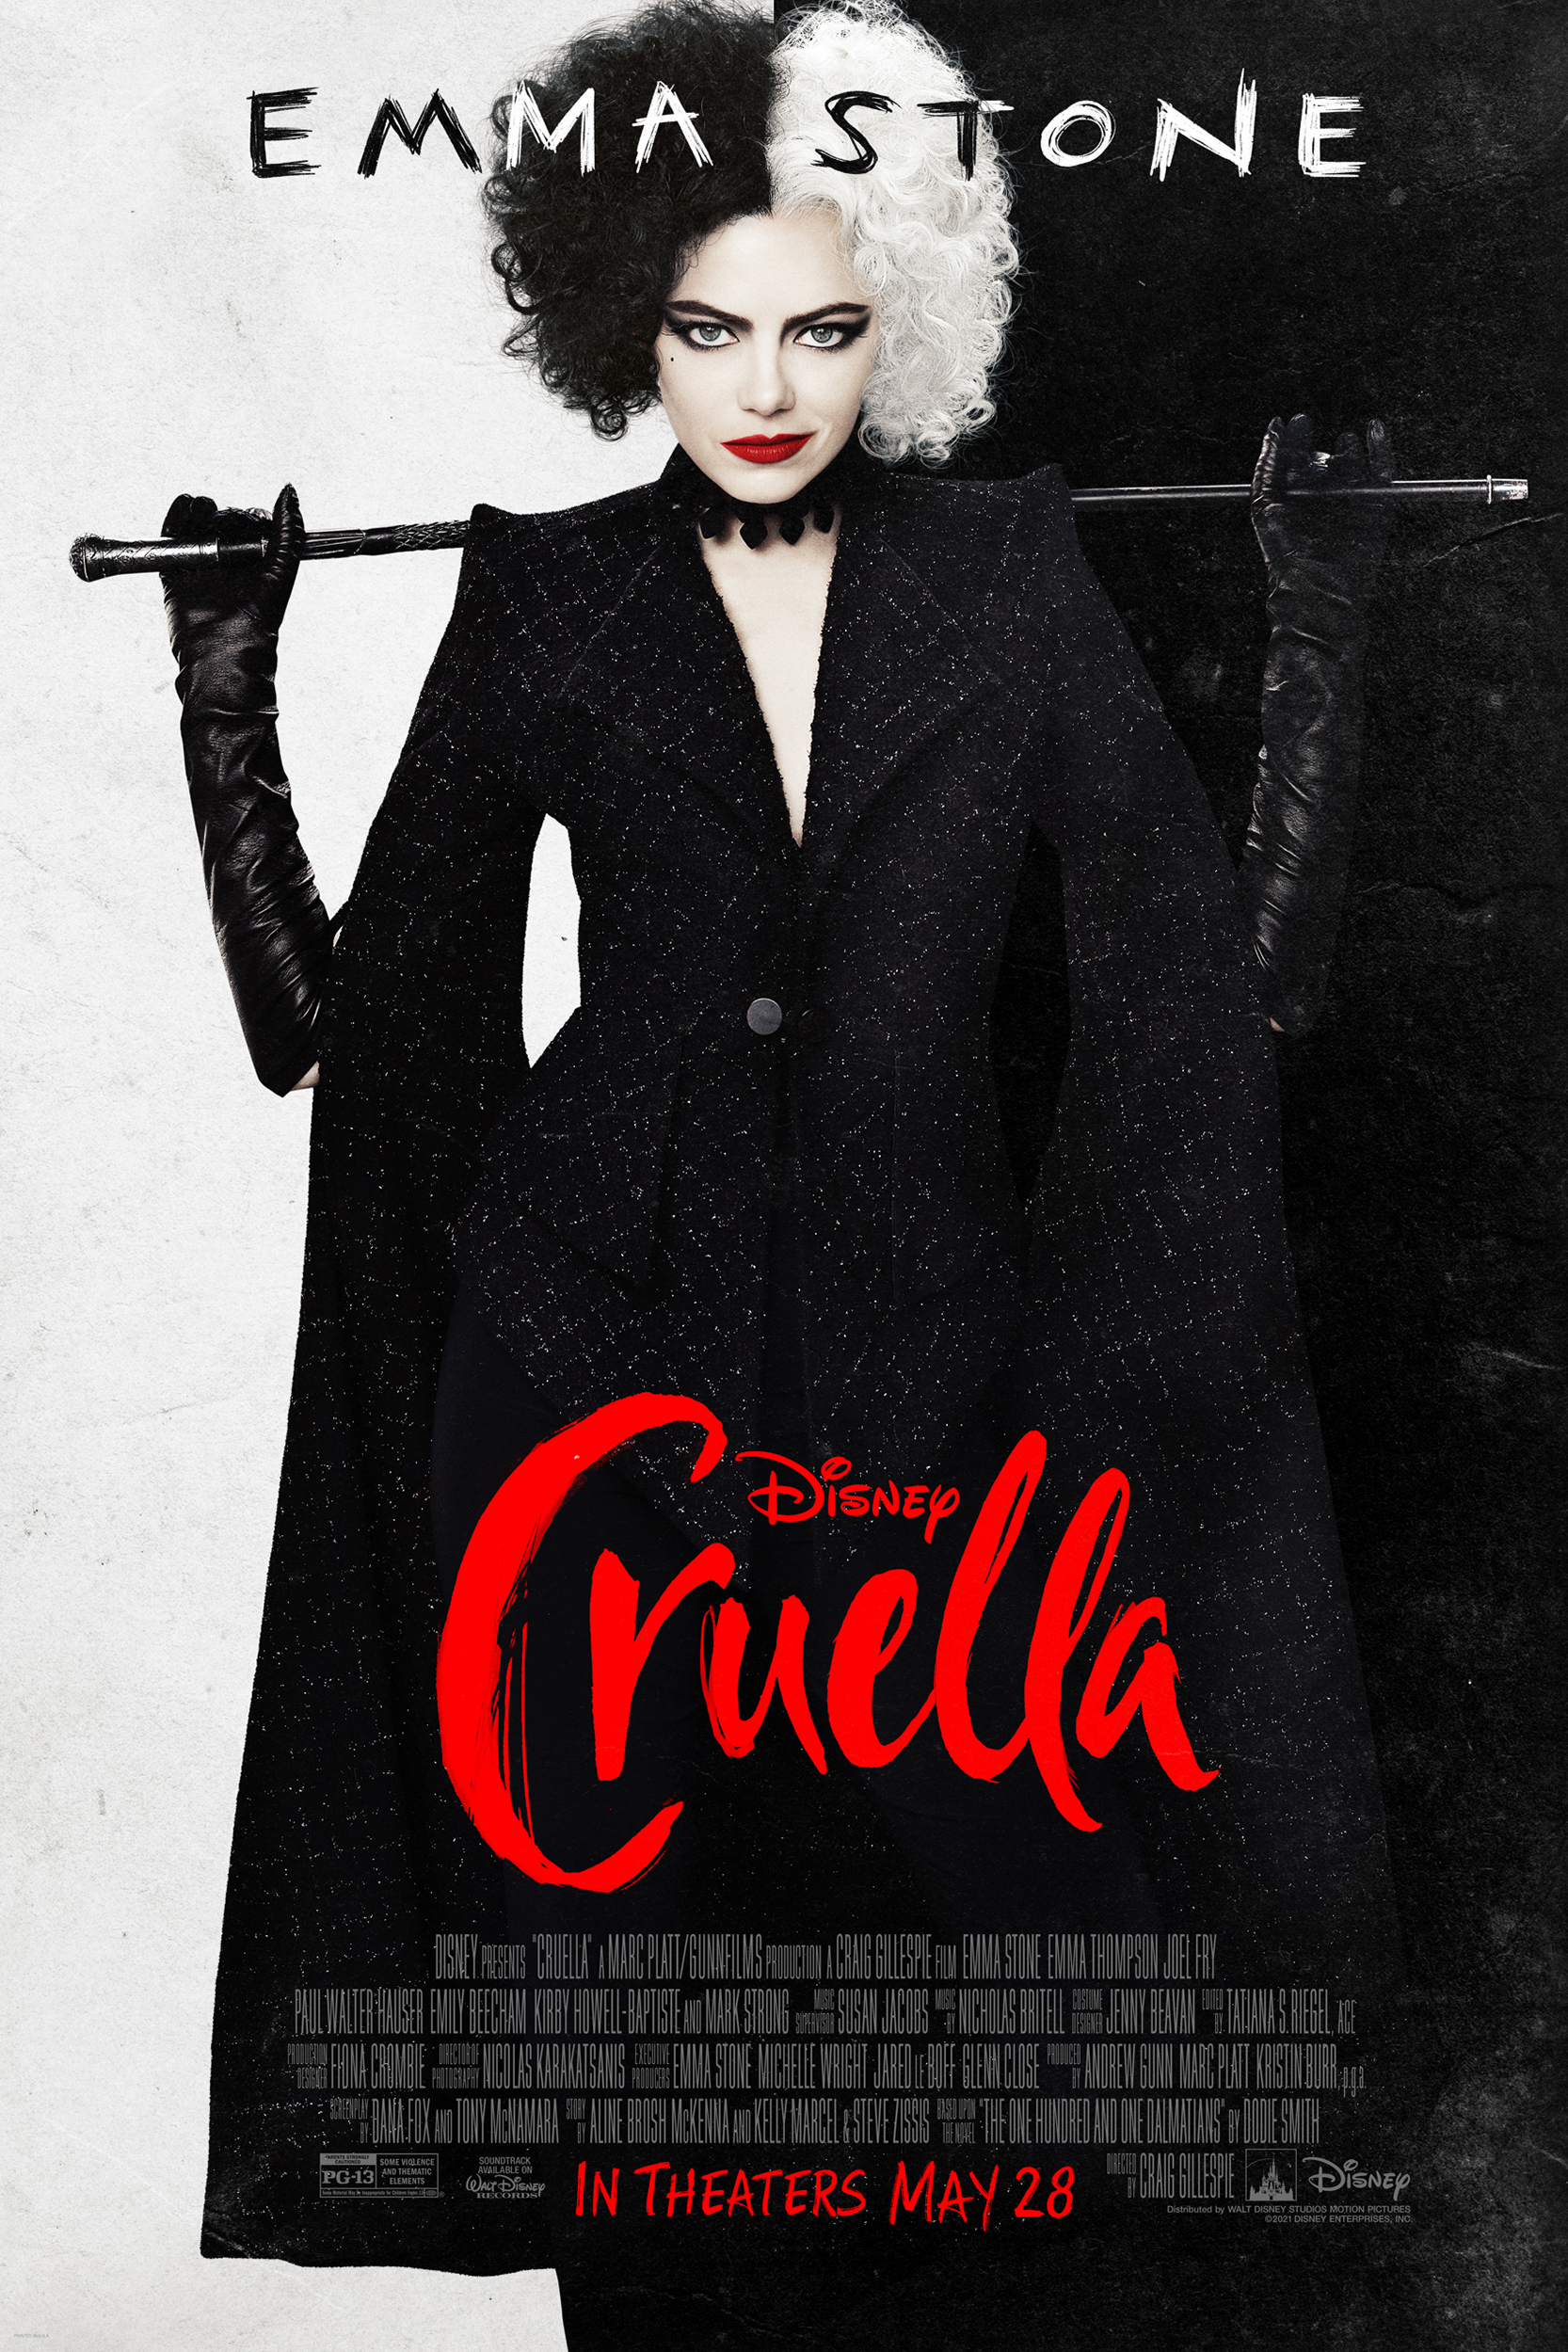 Still of Cruella